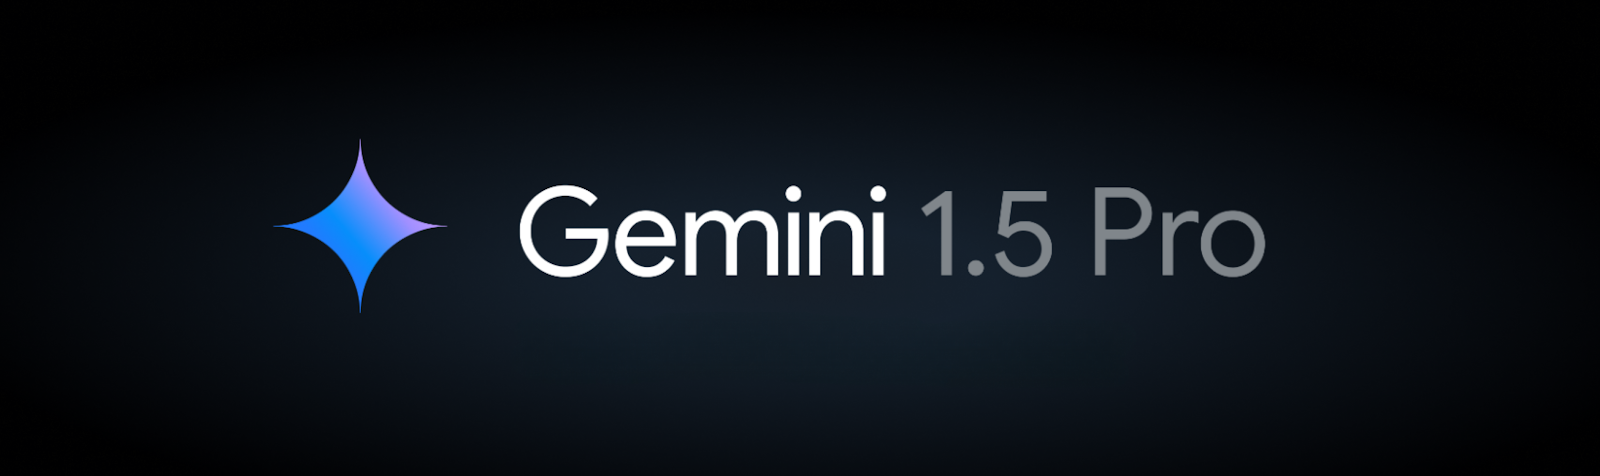 Google Meluncurkan Gemini 1.5 Pro